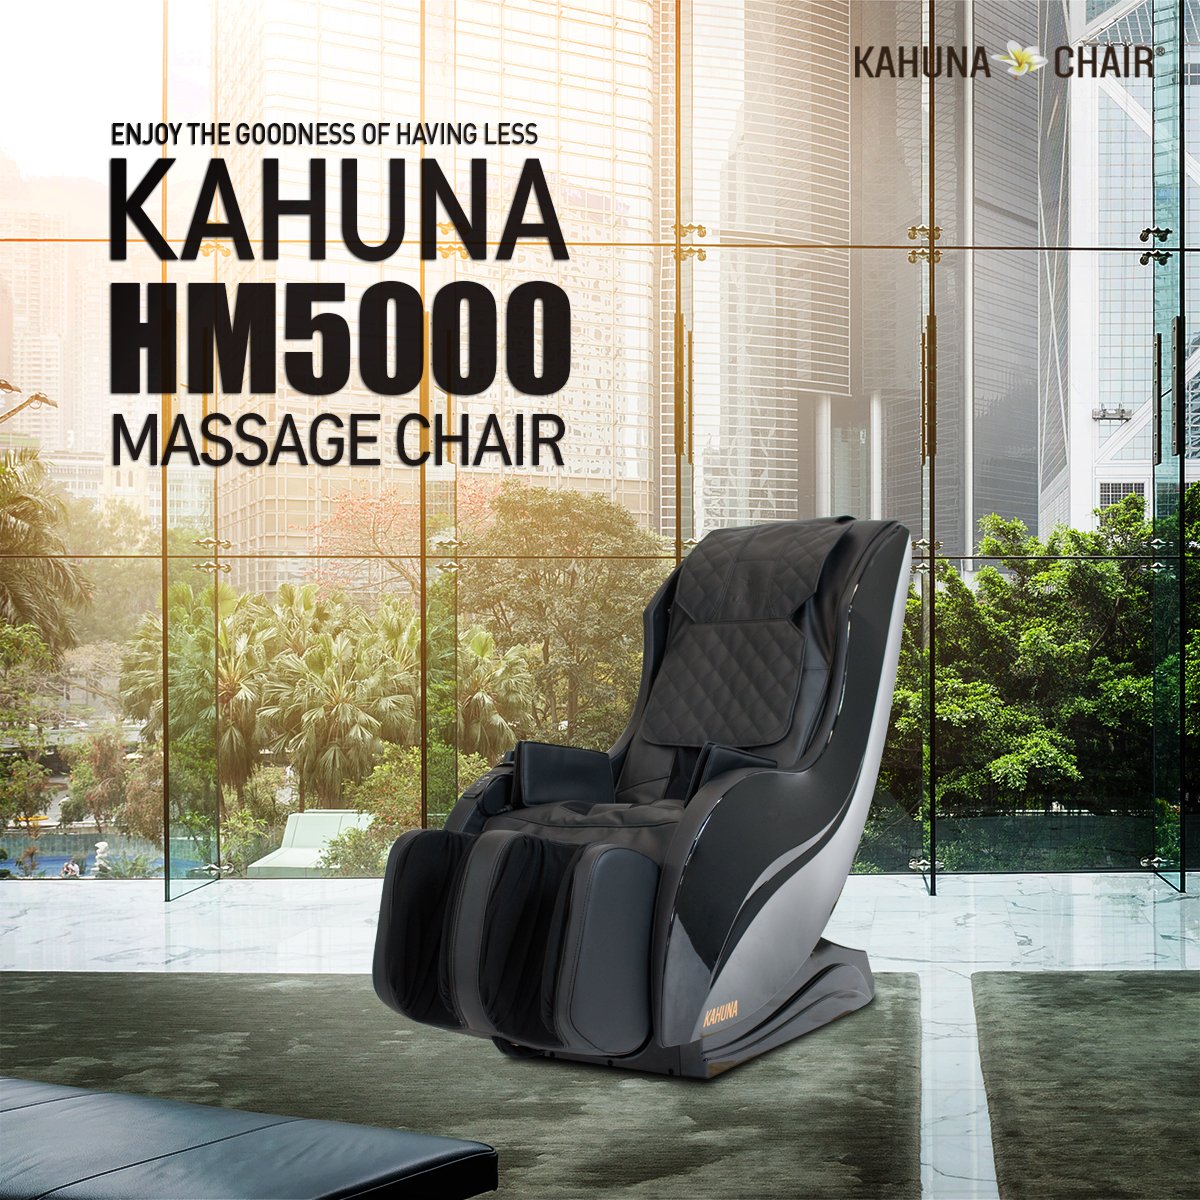 Enjoy the Goodness of having less Kahuna limitless slender  massage chair